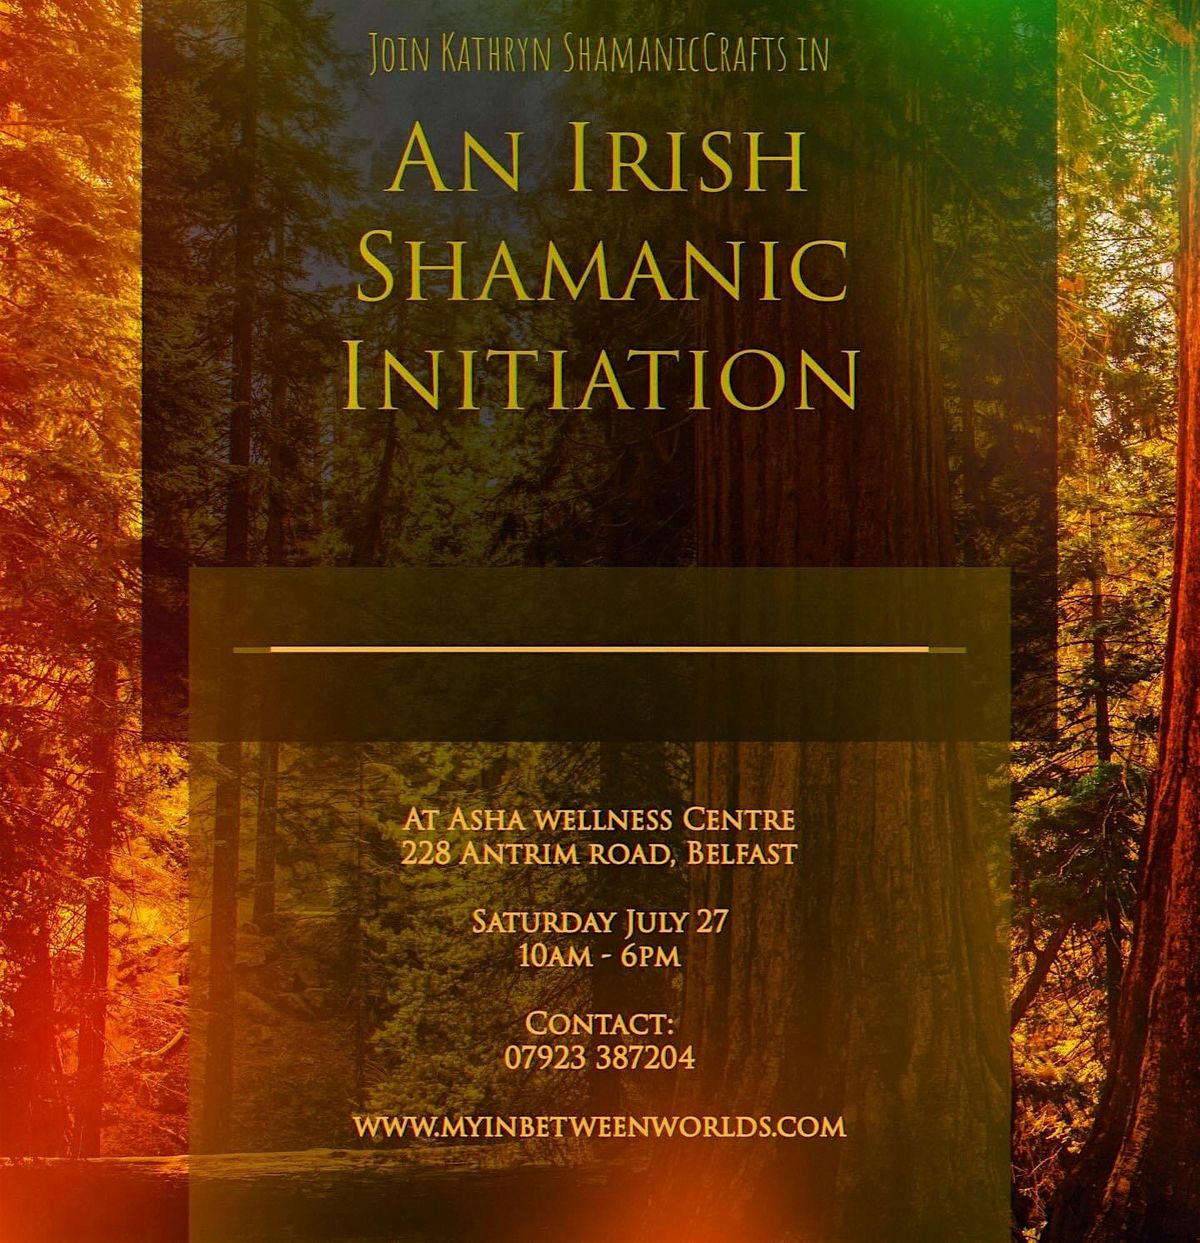 An Irish Shamanic Initiation